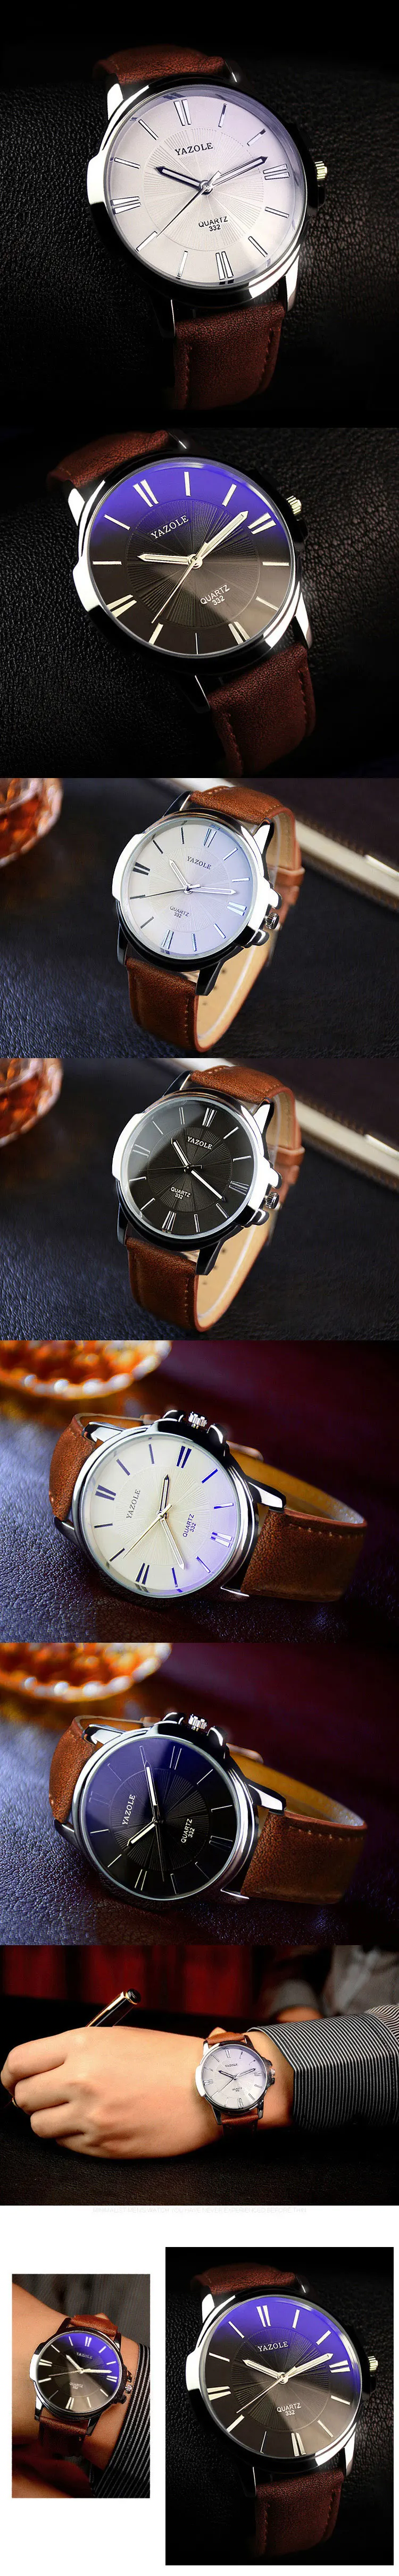 YAZOLE Мода 2019 г. Кварцевые часы для мужчин часы Лидирующий бренд эксклюзивные мужские часы бизнес s наручные часы наручные Relogio Masculino